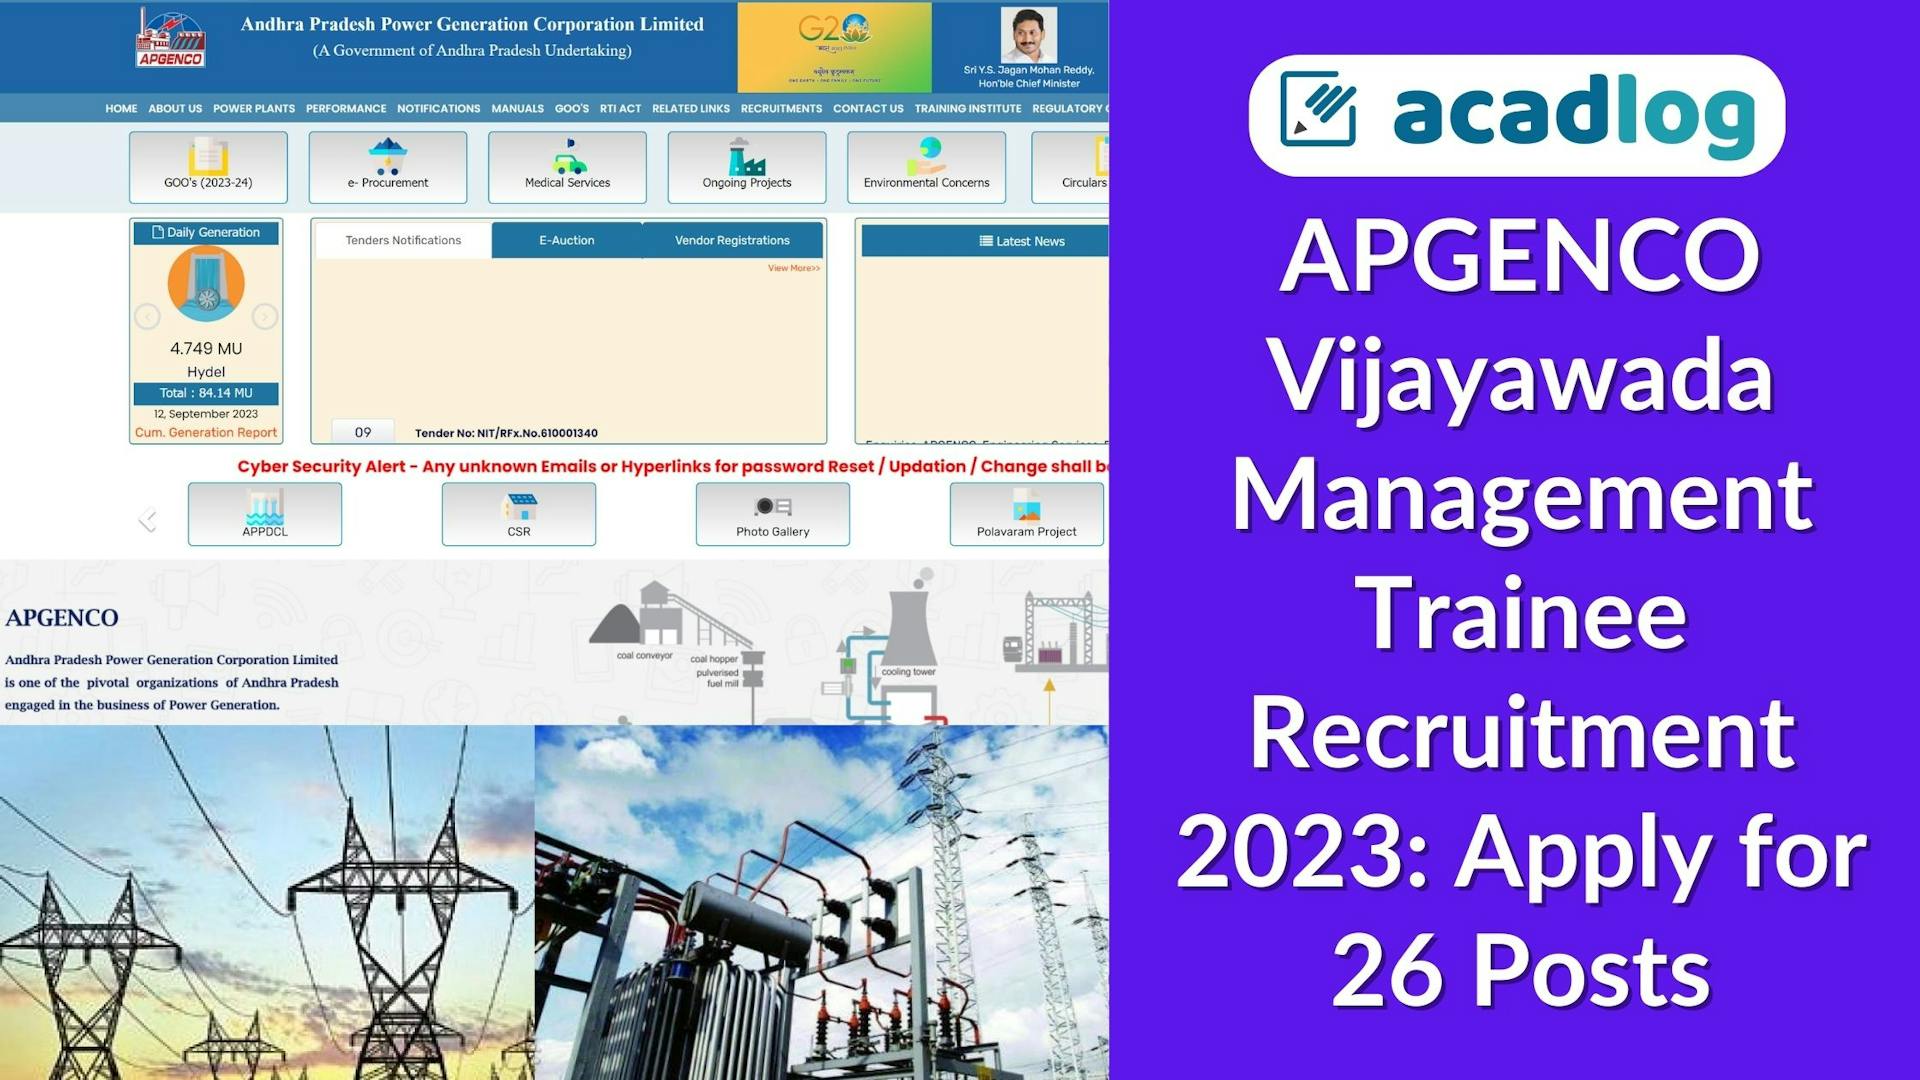 APGENCO Vijayawada Management Trainee Recruitment 2023: Apply for 26 Posts